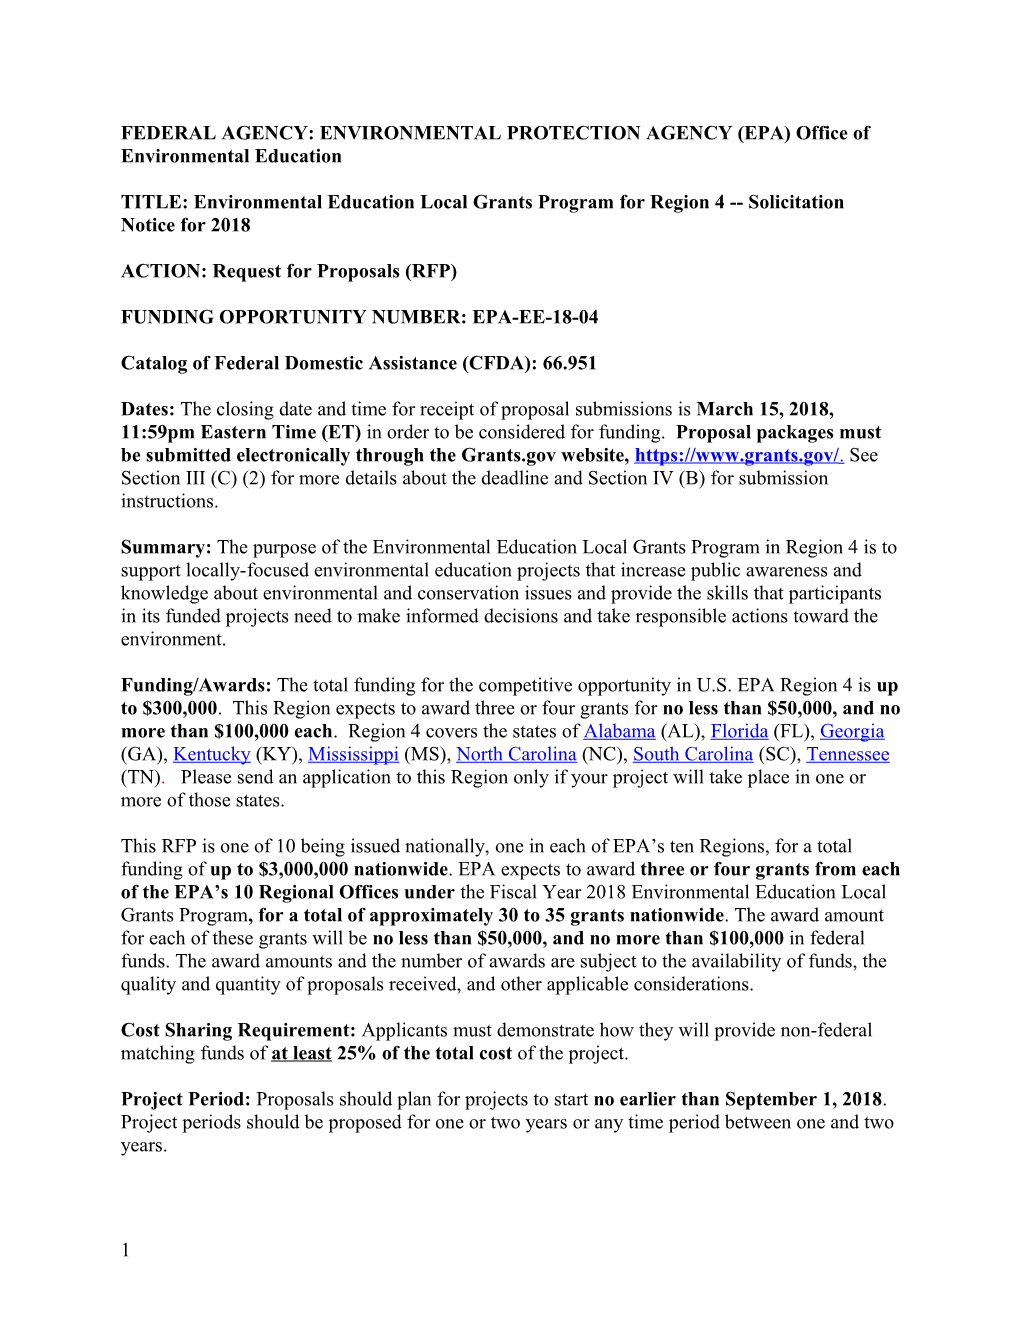 FEDERAL AGENCY: ENVIRONMENTAL PROTECTION AGENCY (EPA) Office of Environmental Education